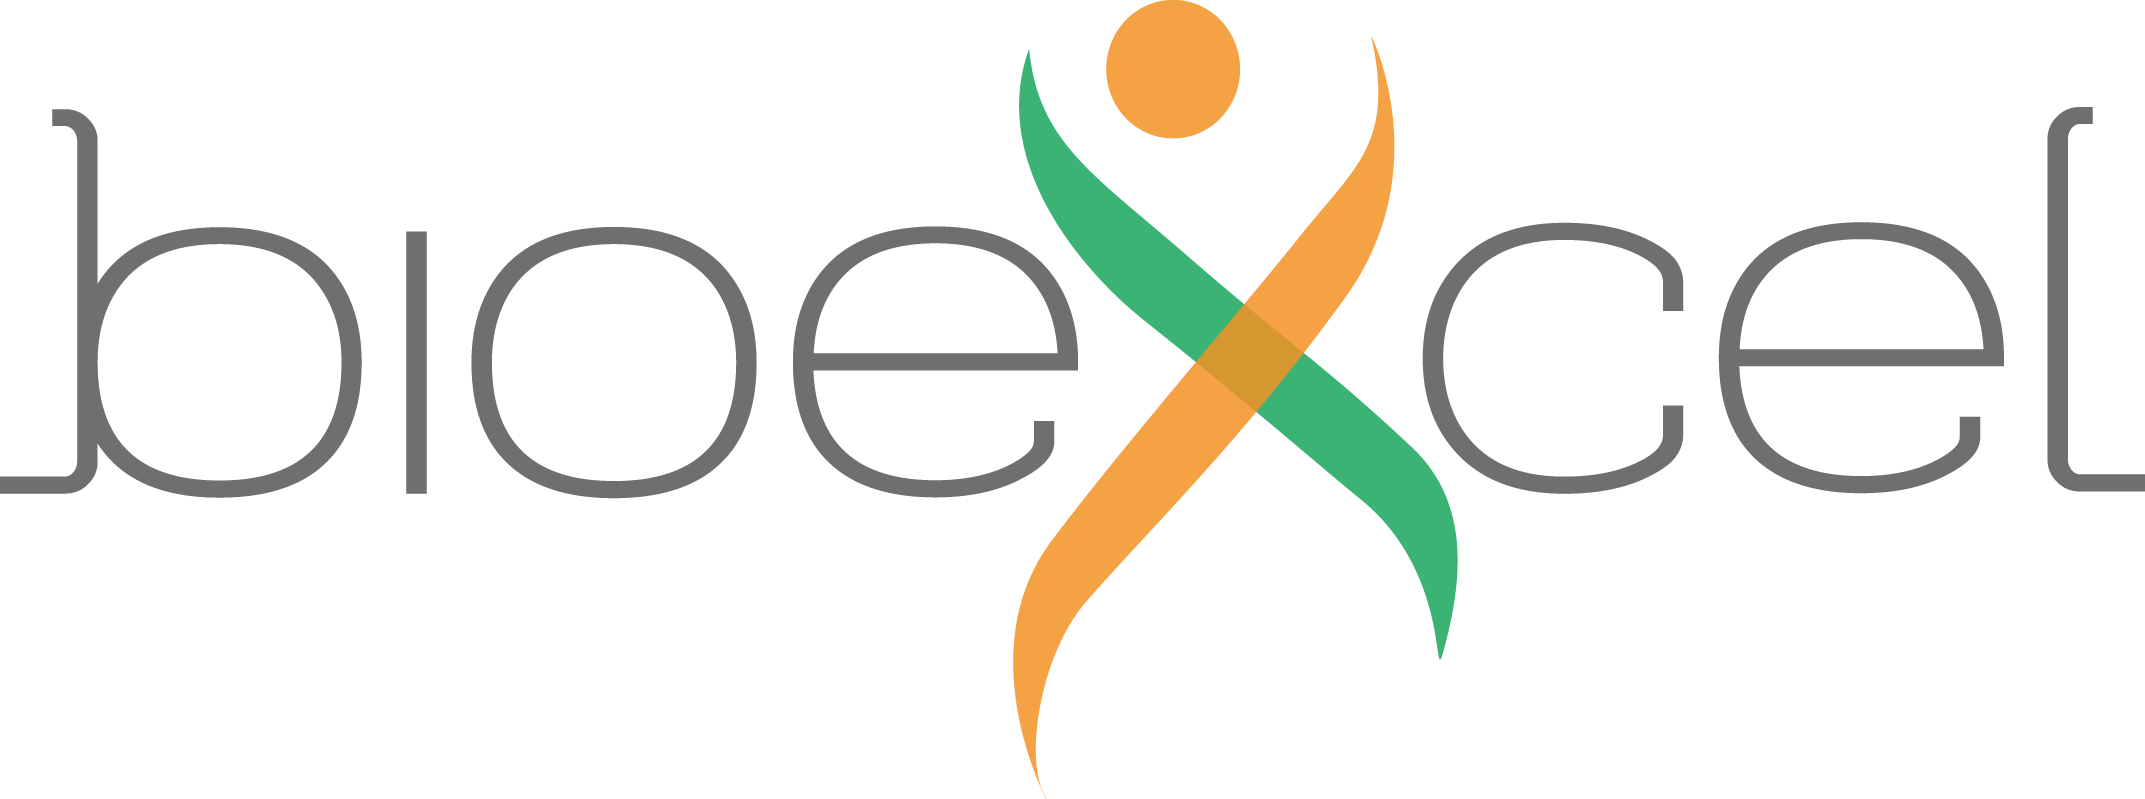 bioexcel-logo